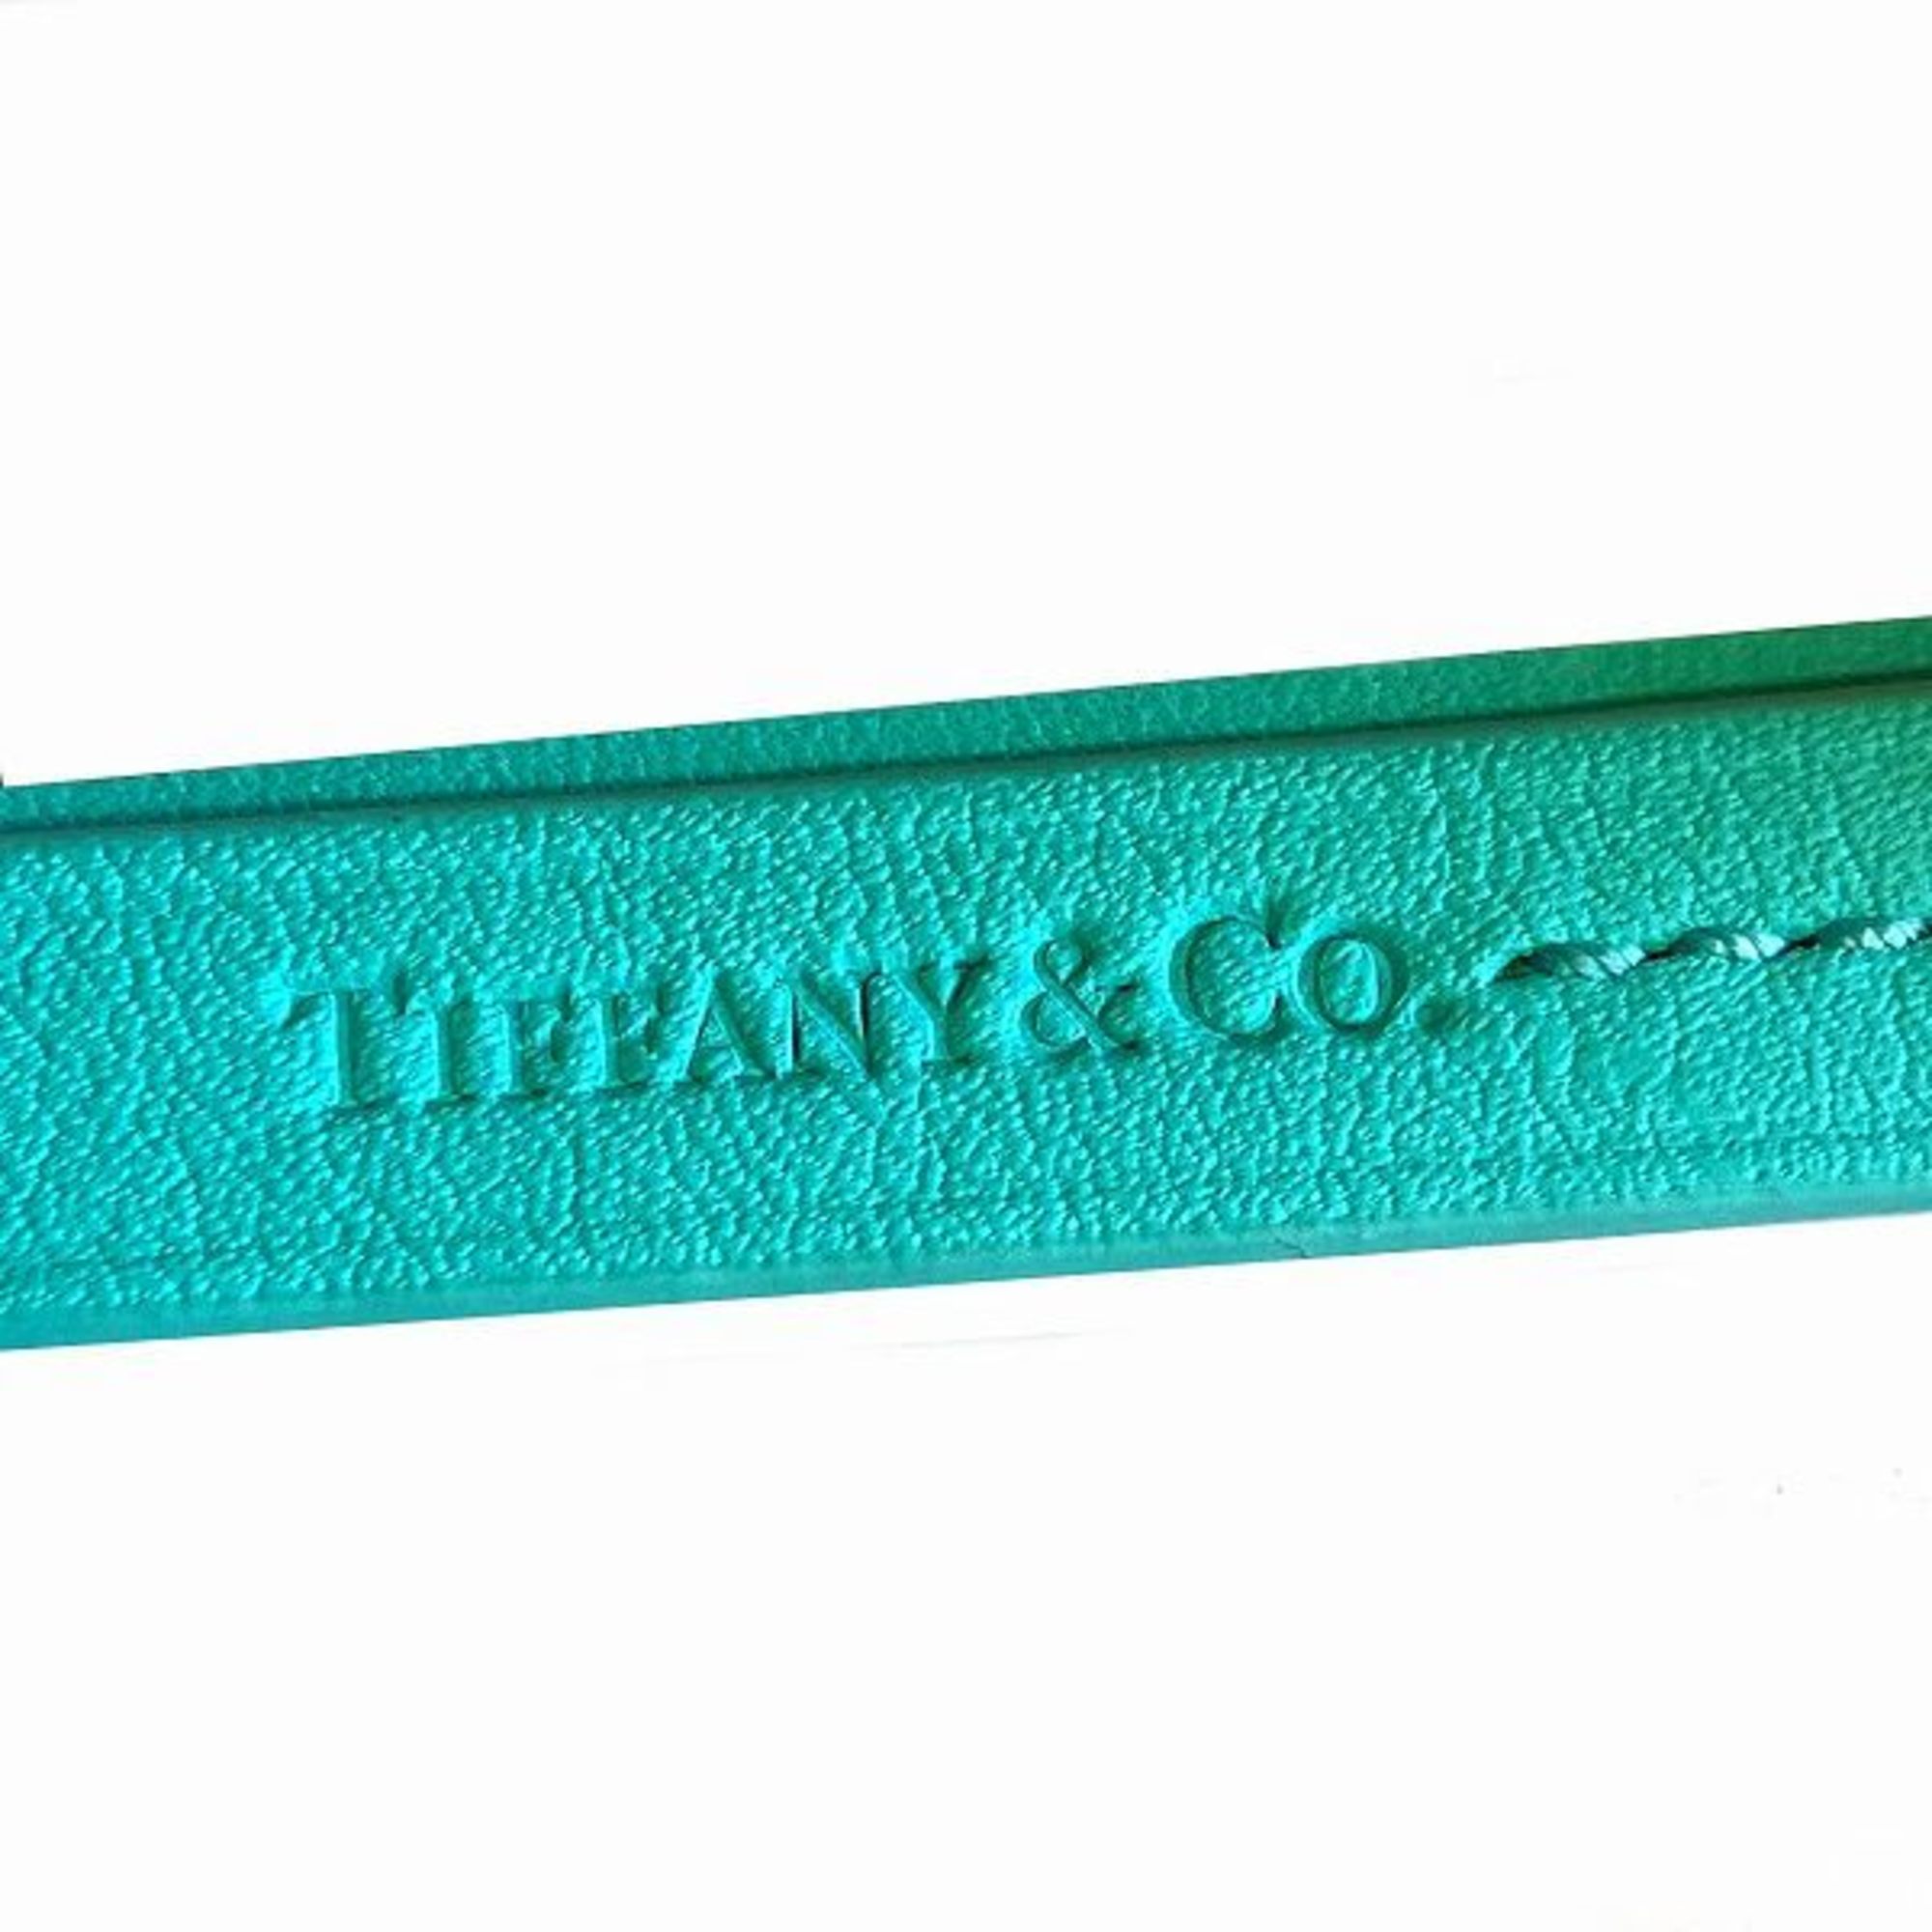 Tiffany bag charm leather blue flower accessory keychain for women